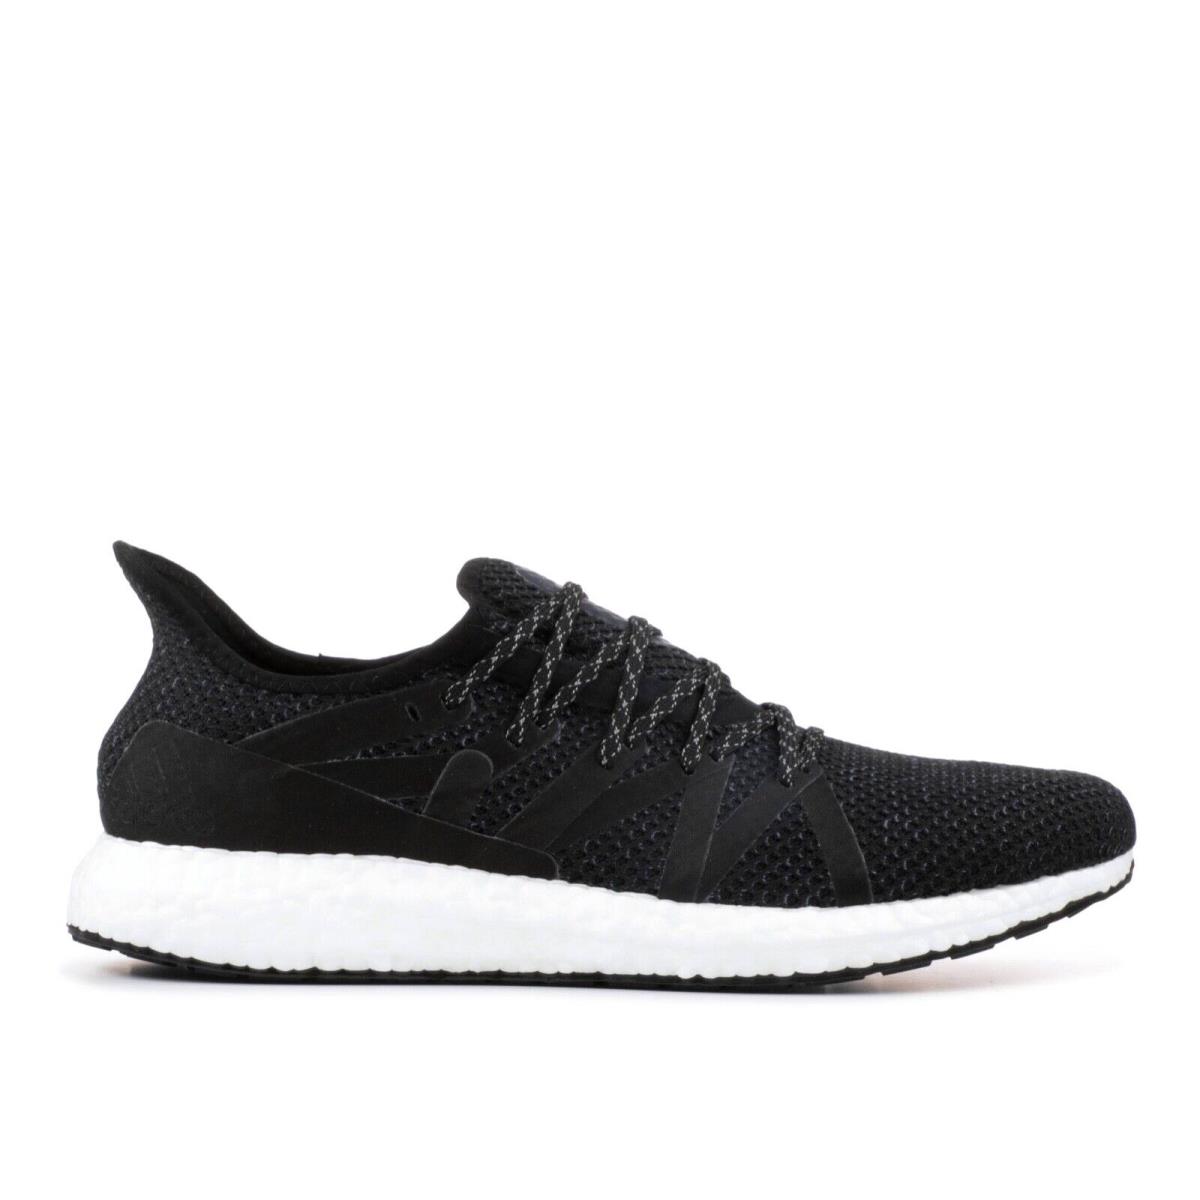 Men`s Adidas AM4NYC `core Black` Fashion Sneakers D97214 - Black